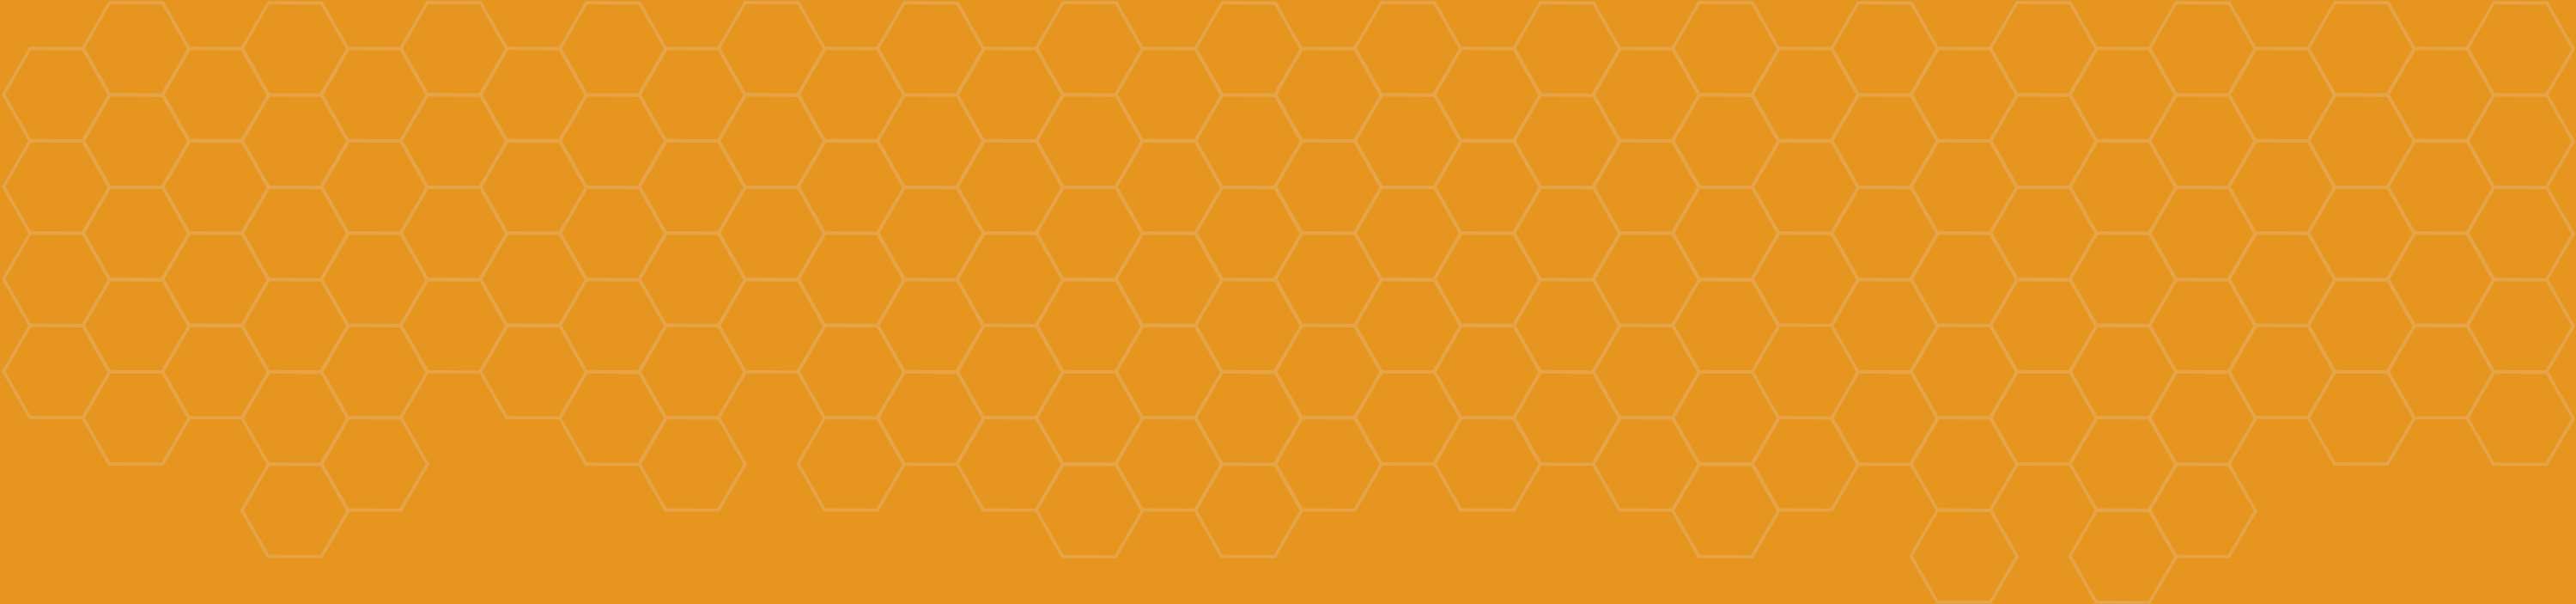 honeycomb graphic